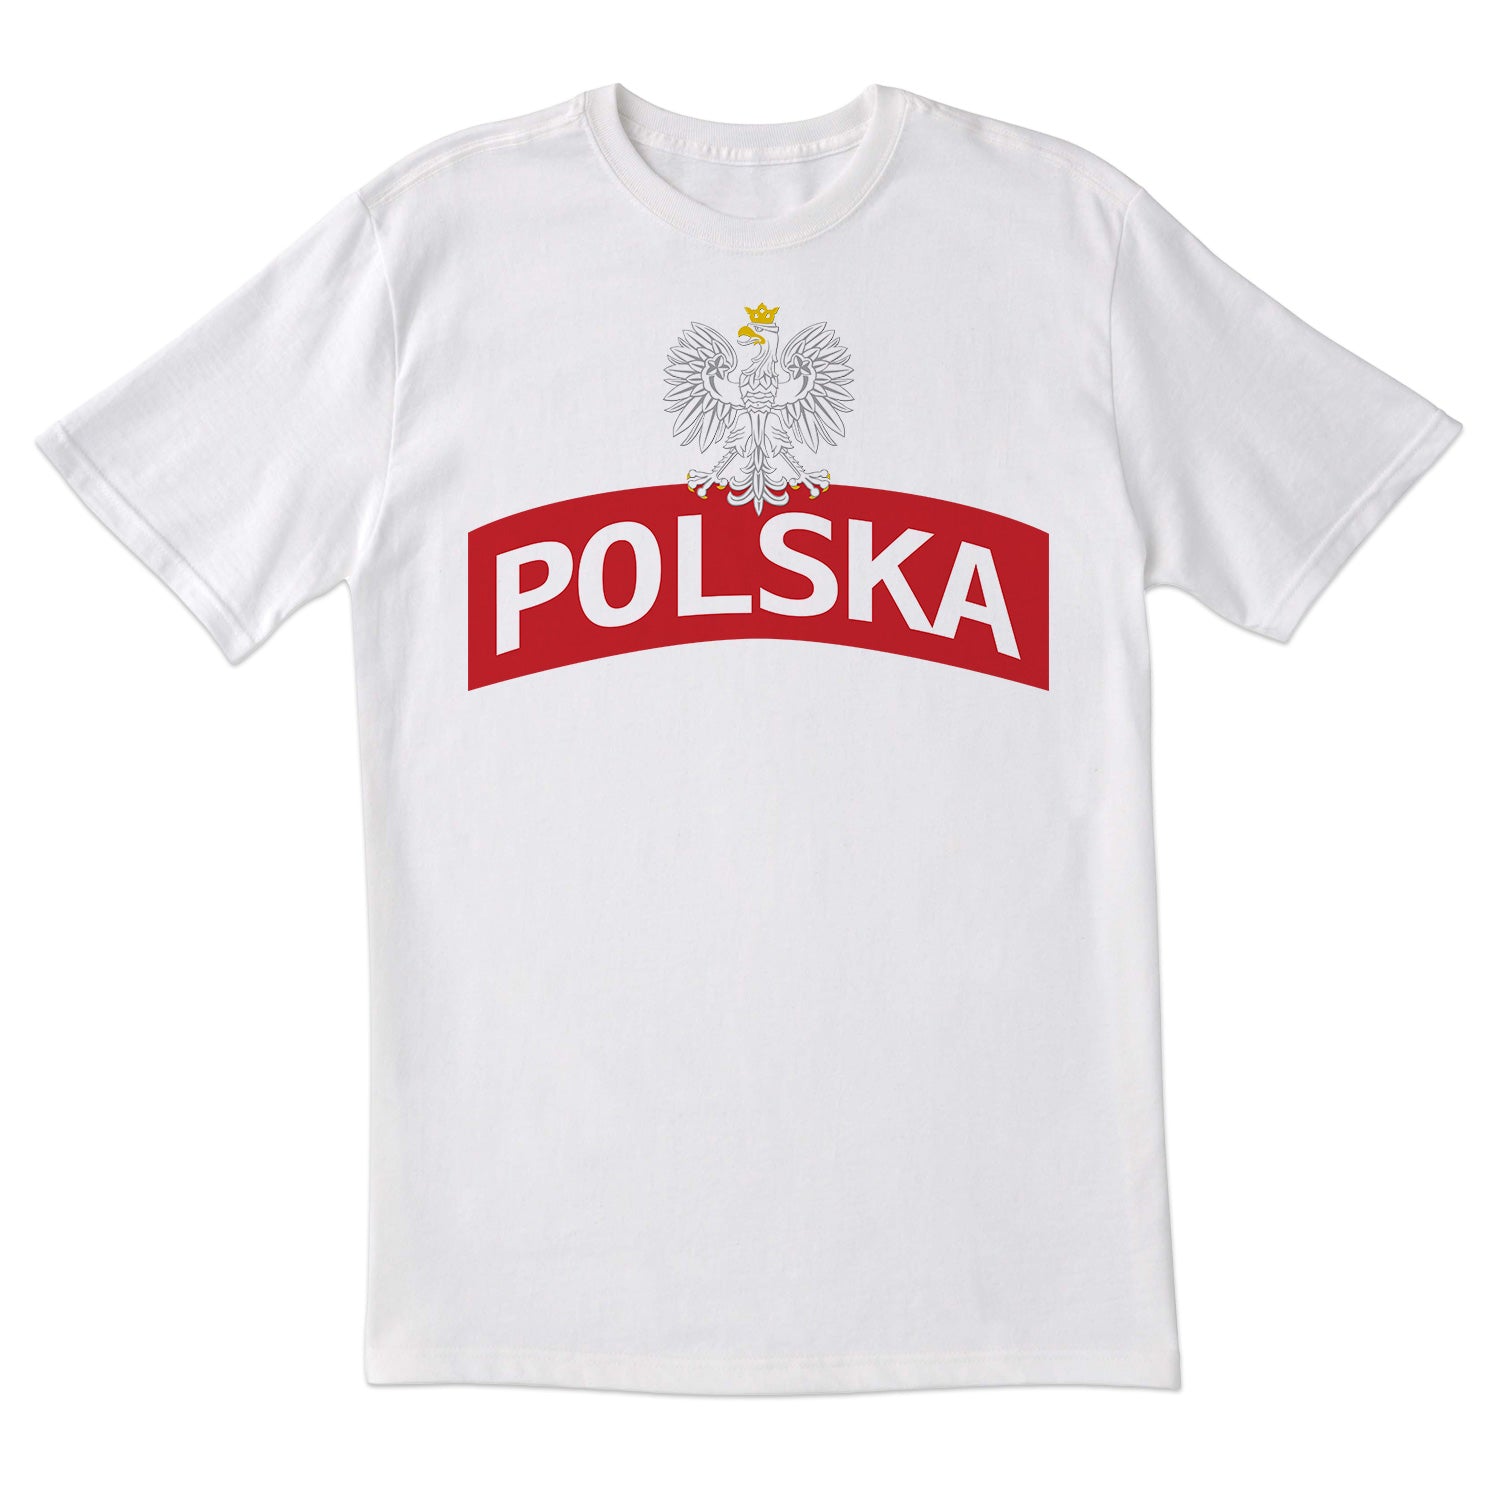 White Eagle Polska Short Sleeve Tshirt